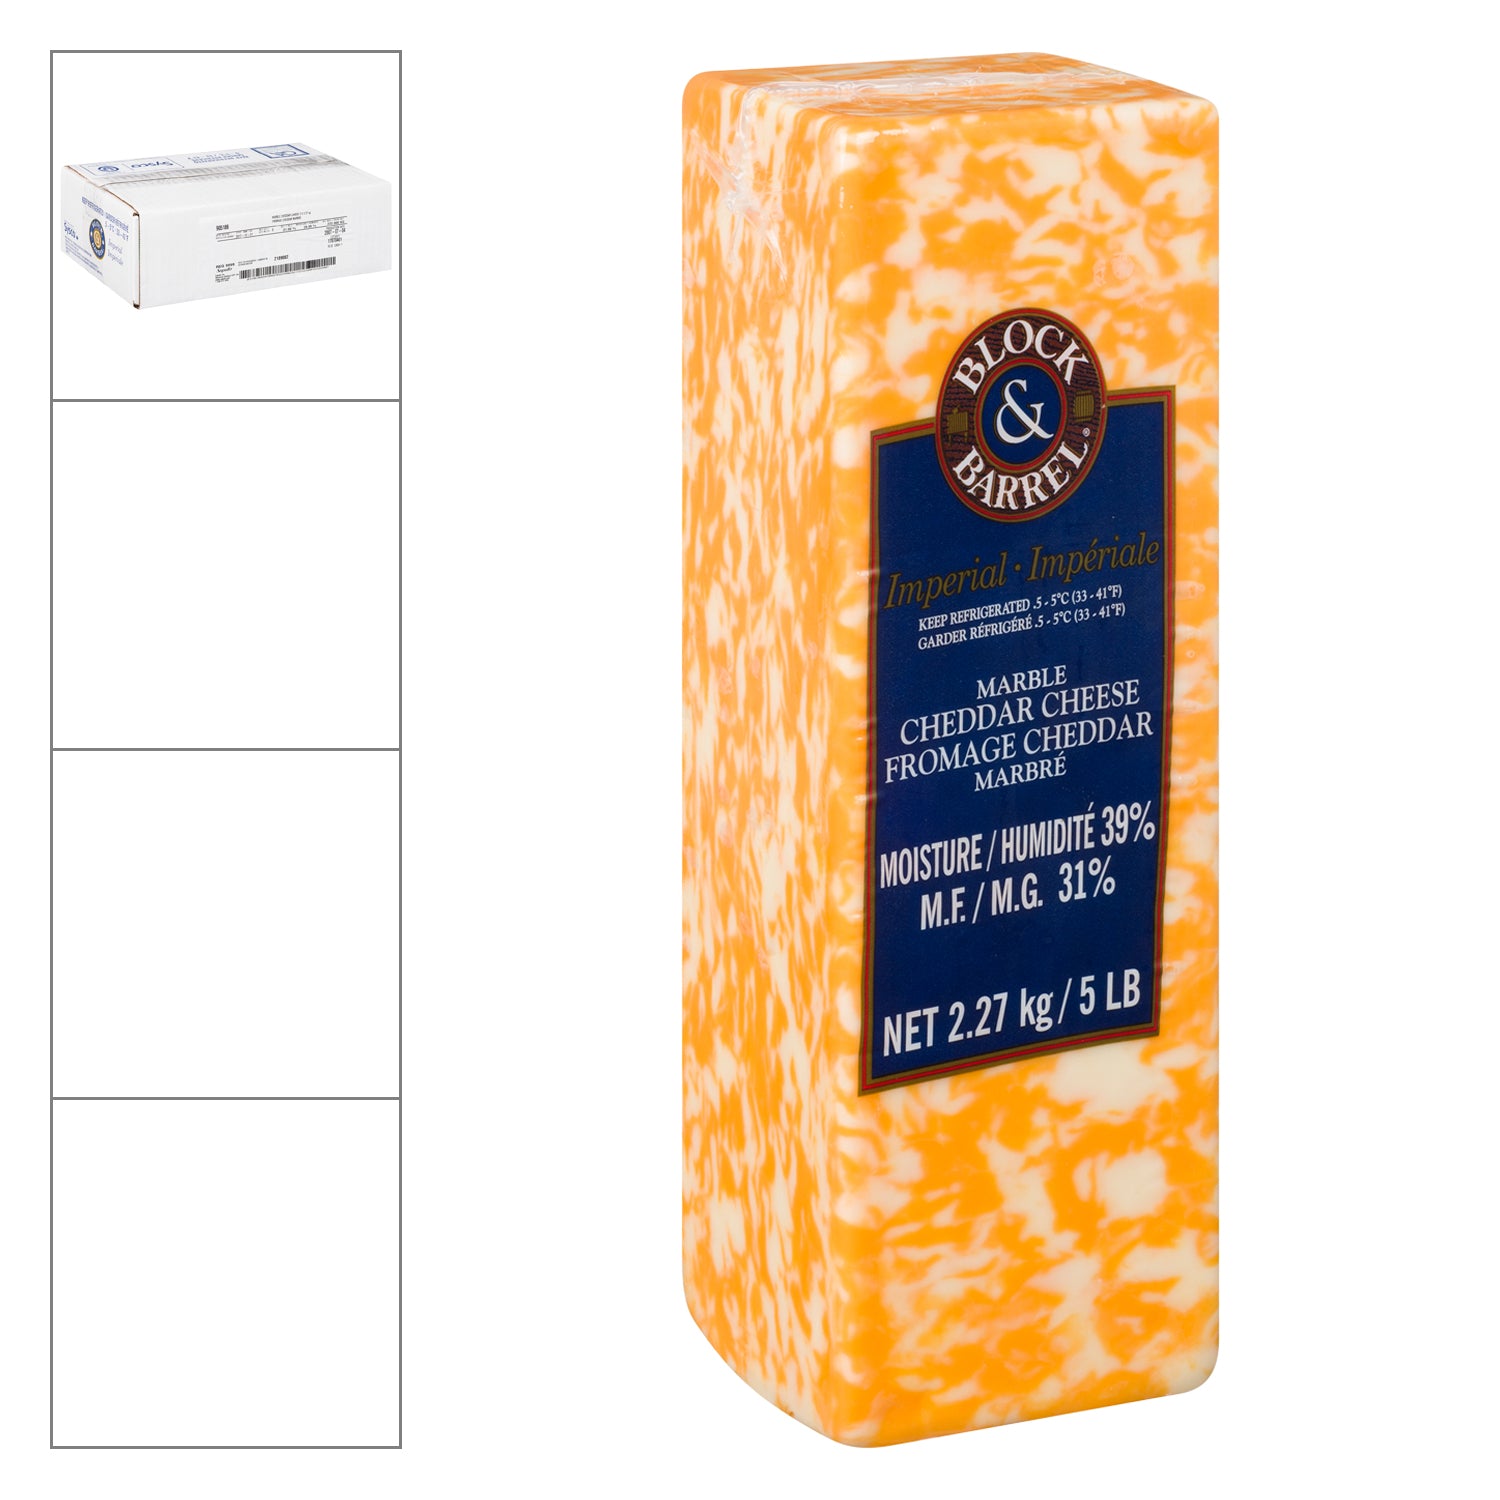 Block & Barrel Imperial Marble Cheddar Cheese 2x2.27kg [$1.67/100g]